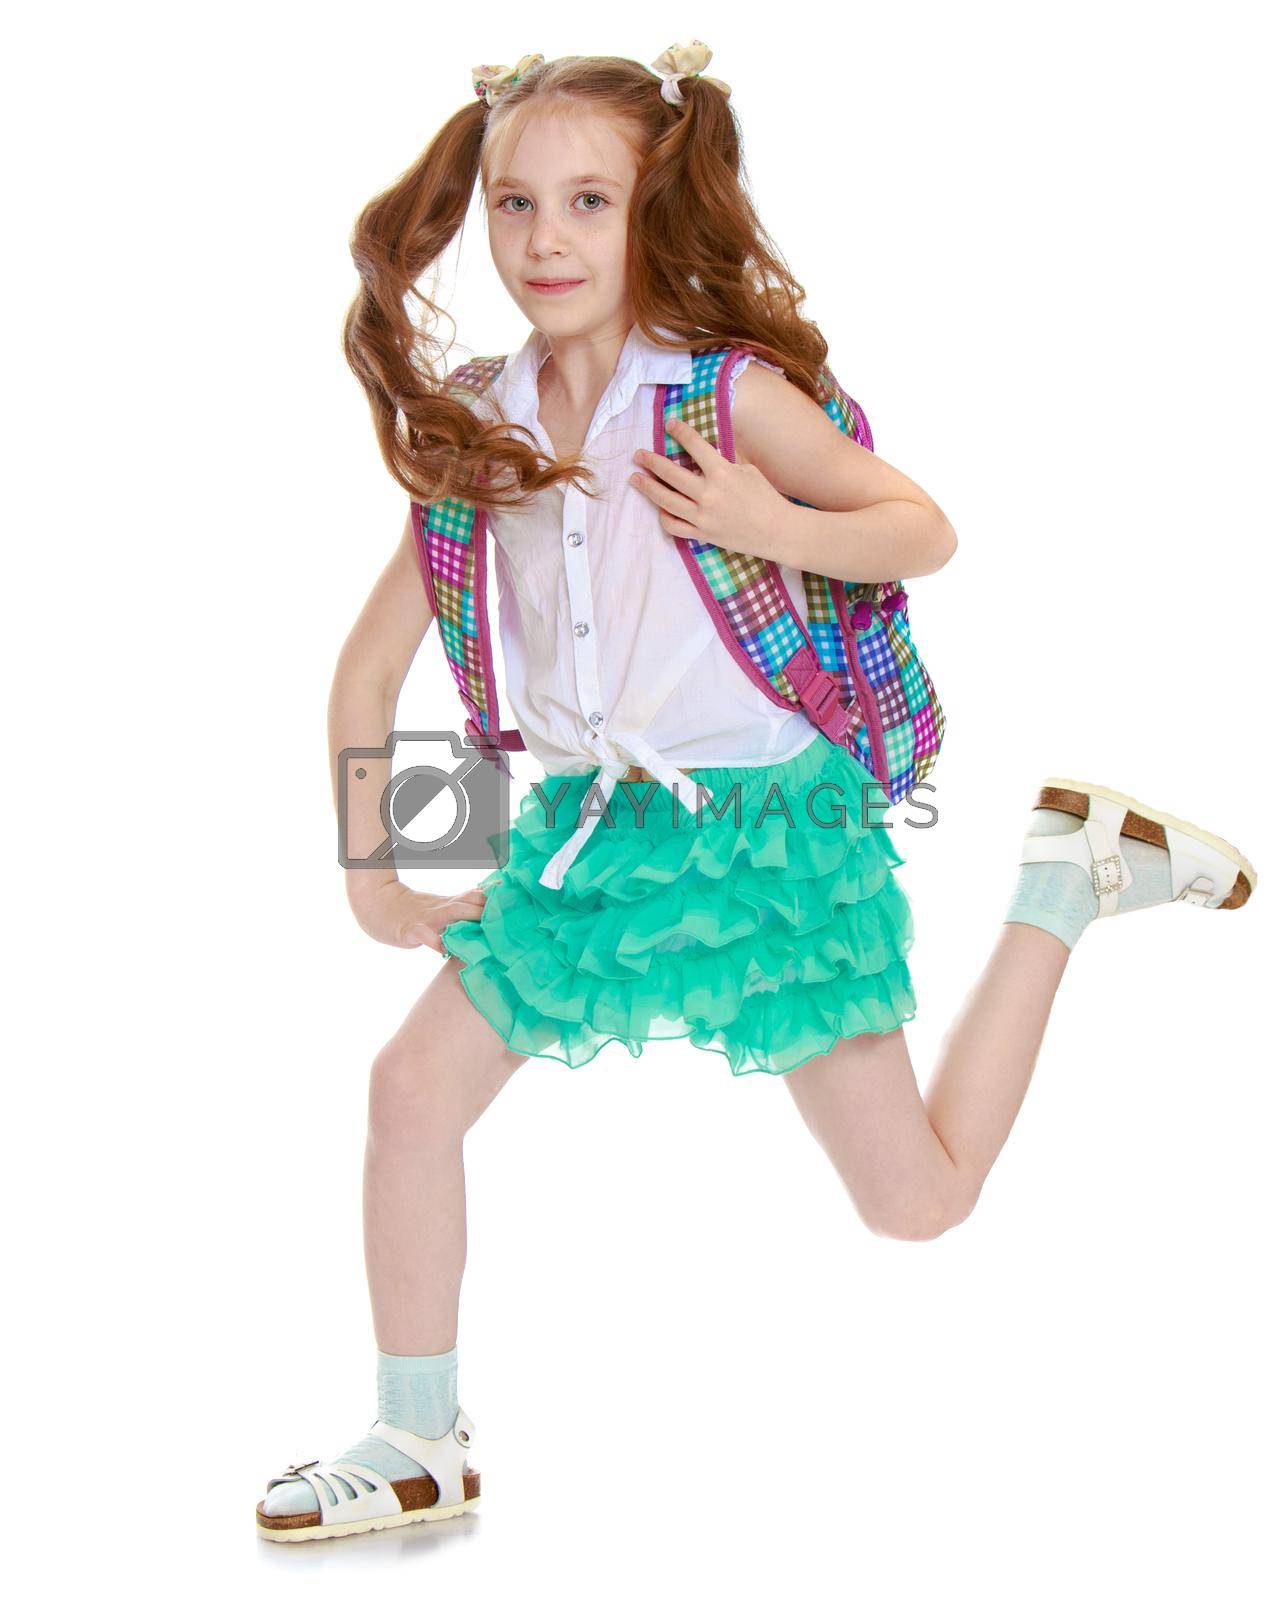 Royalty free image of Girl with the school portfolio by kolesnikov_studio